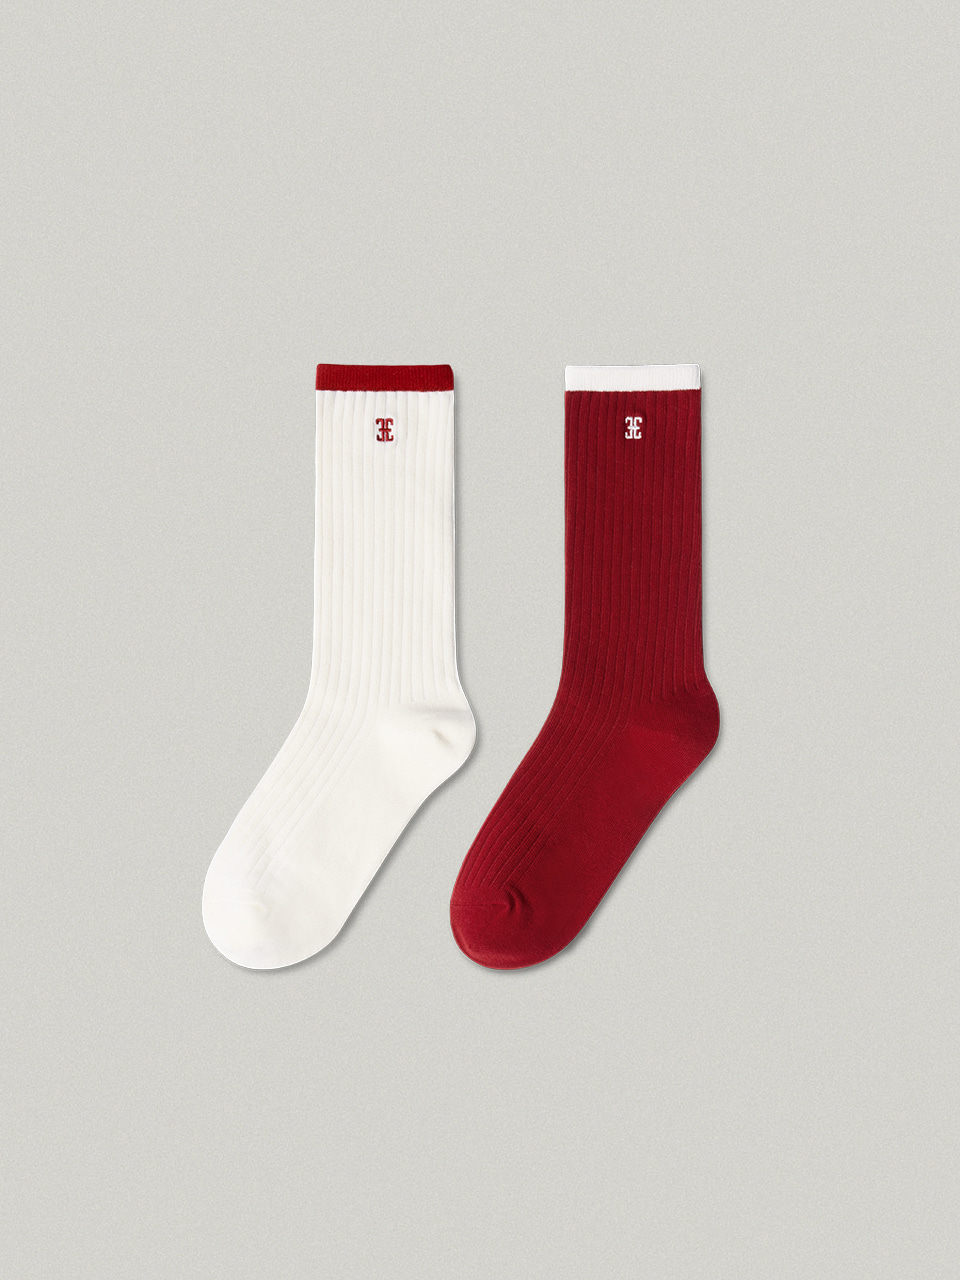 Line Point Classic Socks - red, cream (set)라인 포인트 클래식 삭스